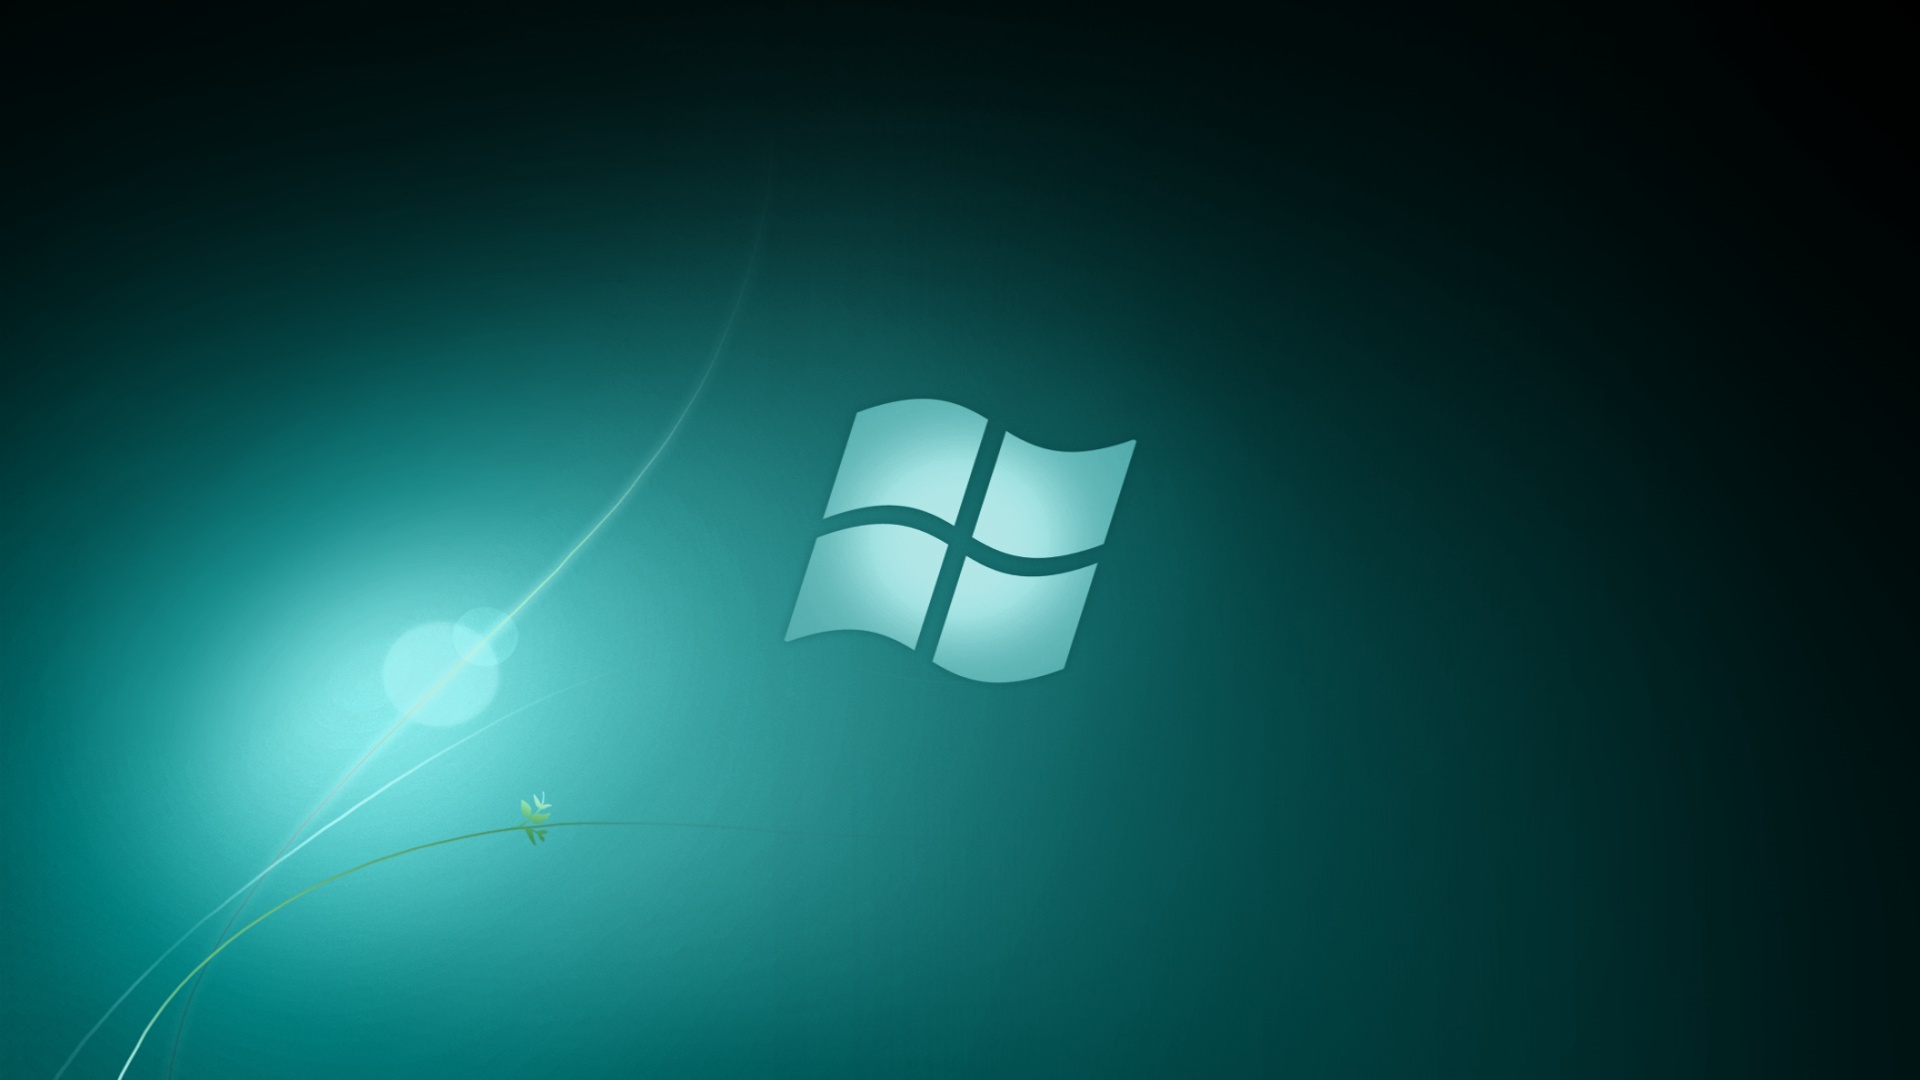 Re Enchanted Windows 7 Starter Wallpaper By Windytheplaneh On Deviantart